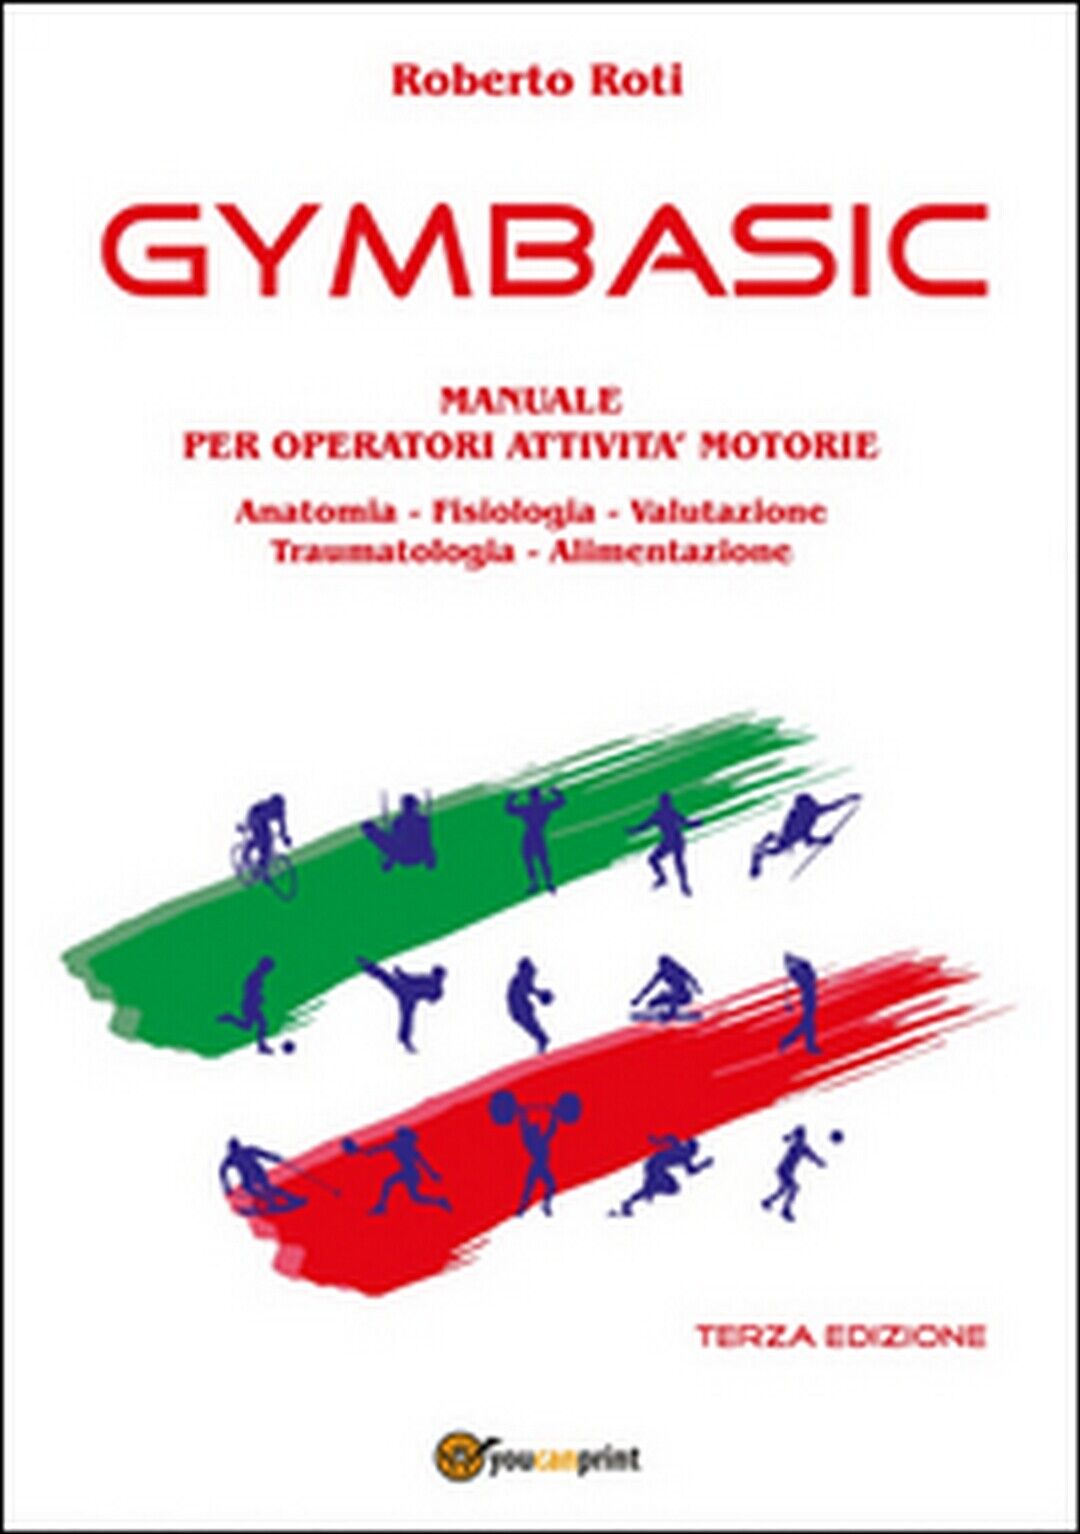 Gymbasic. Manuale per operatori attivit? motorie, Roberto Roti,  2016,  Youcanp.